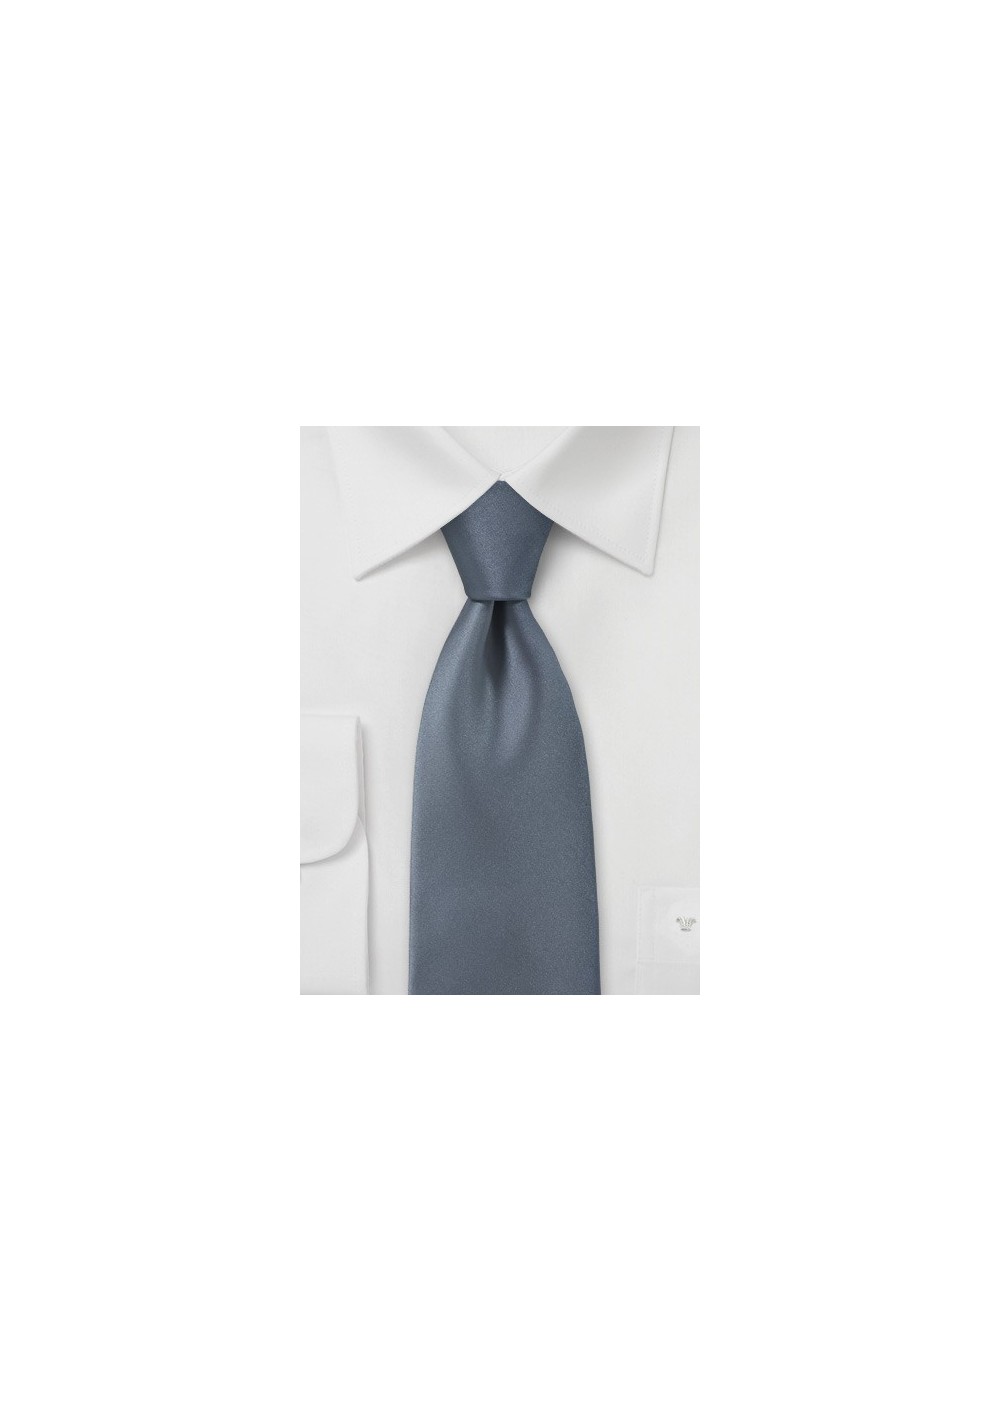 Solid Colored Tie in Carbon Grey